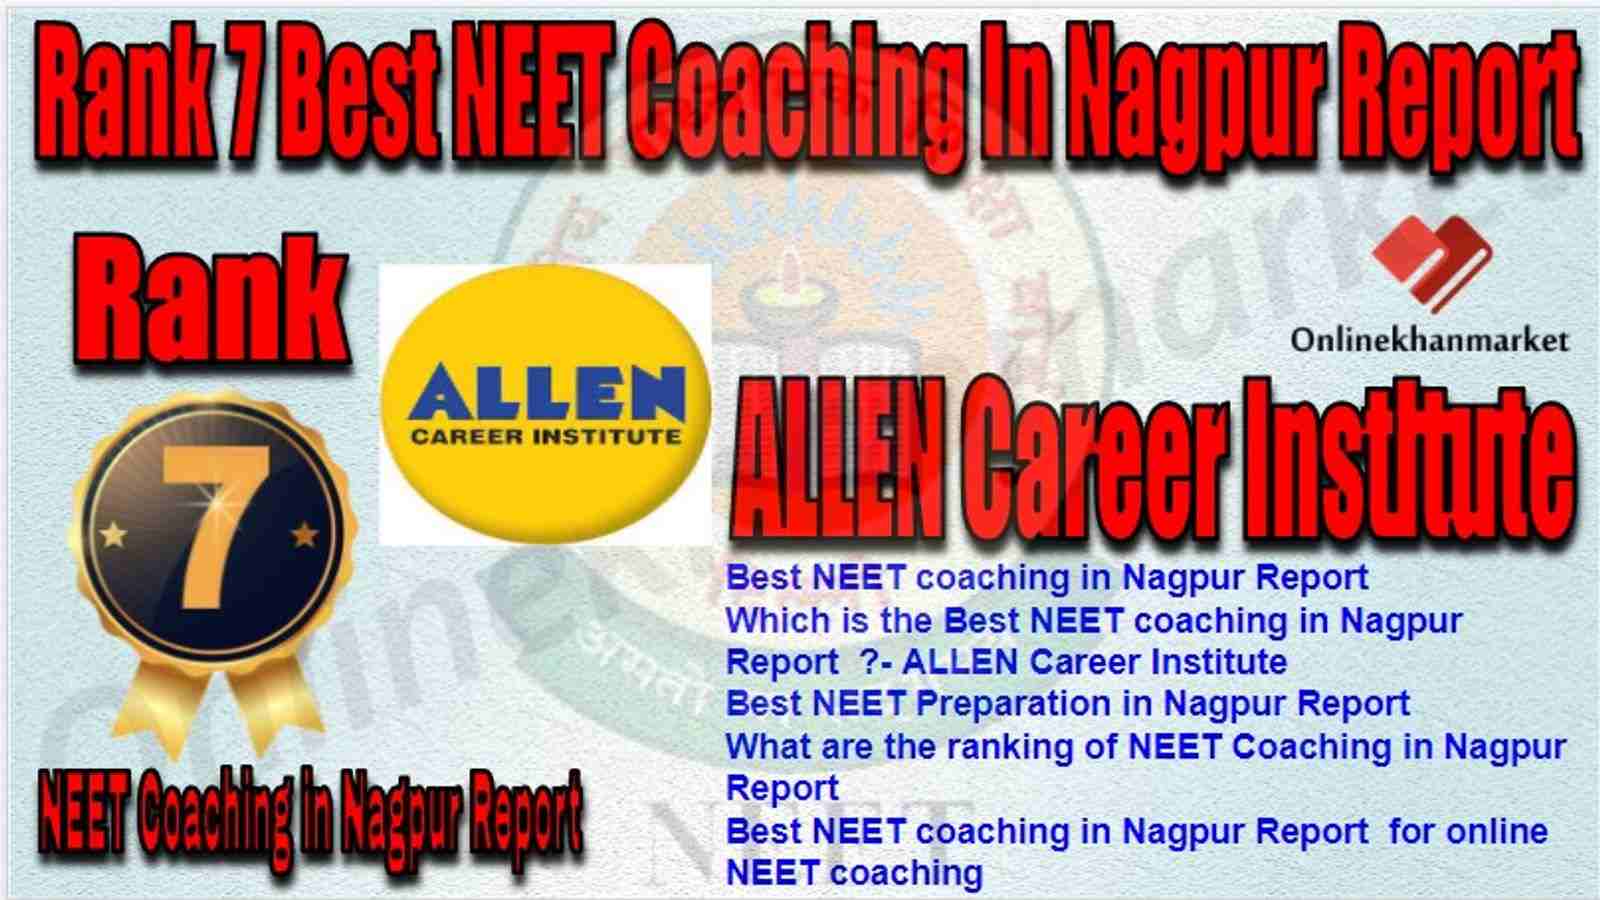 Rank 7 Best NEET Coaching nagpur report